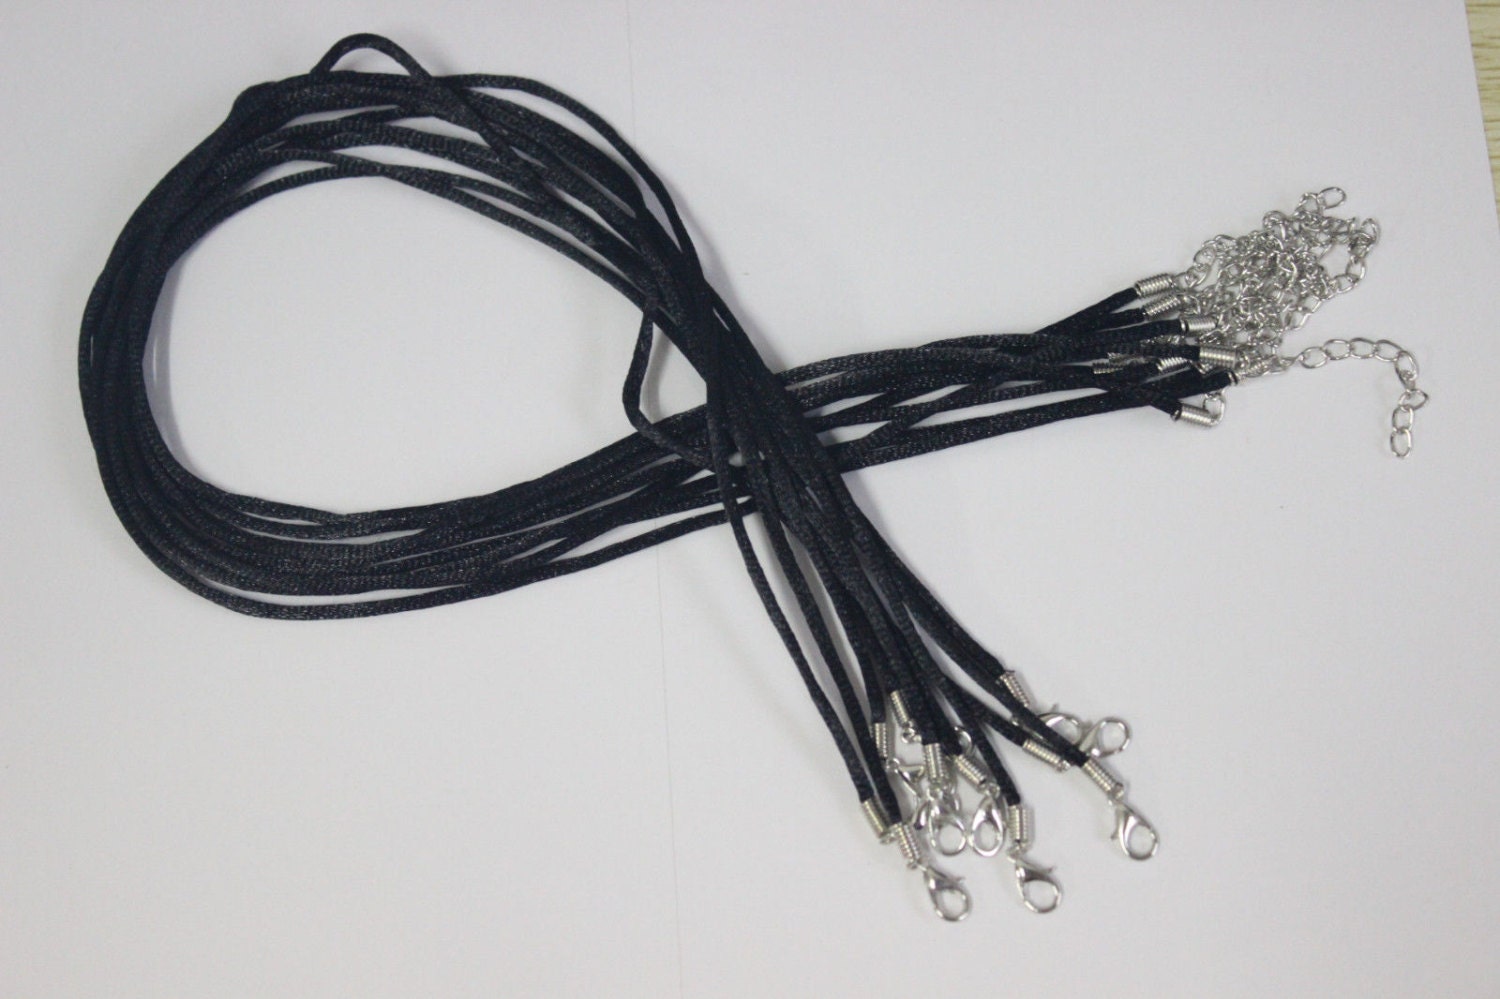 Black Satin Silk Cord Necklace